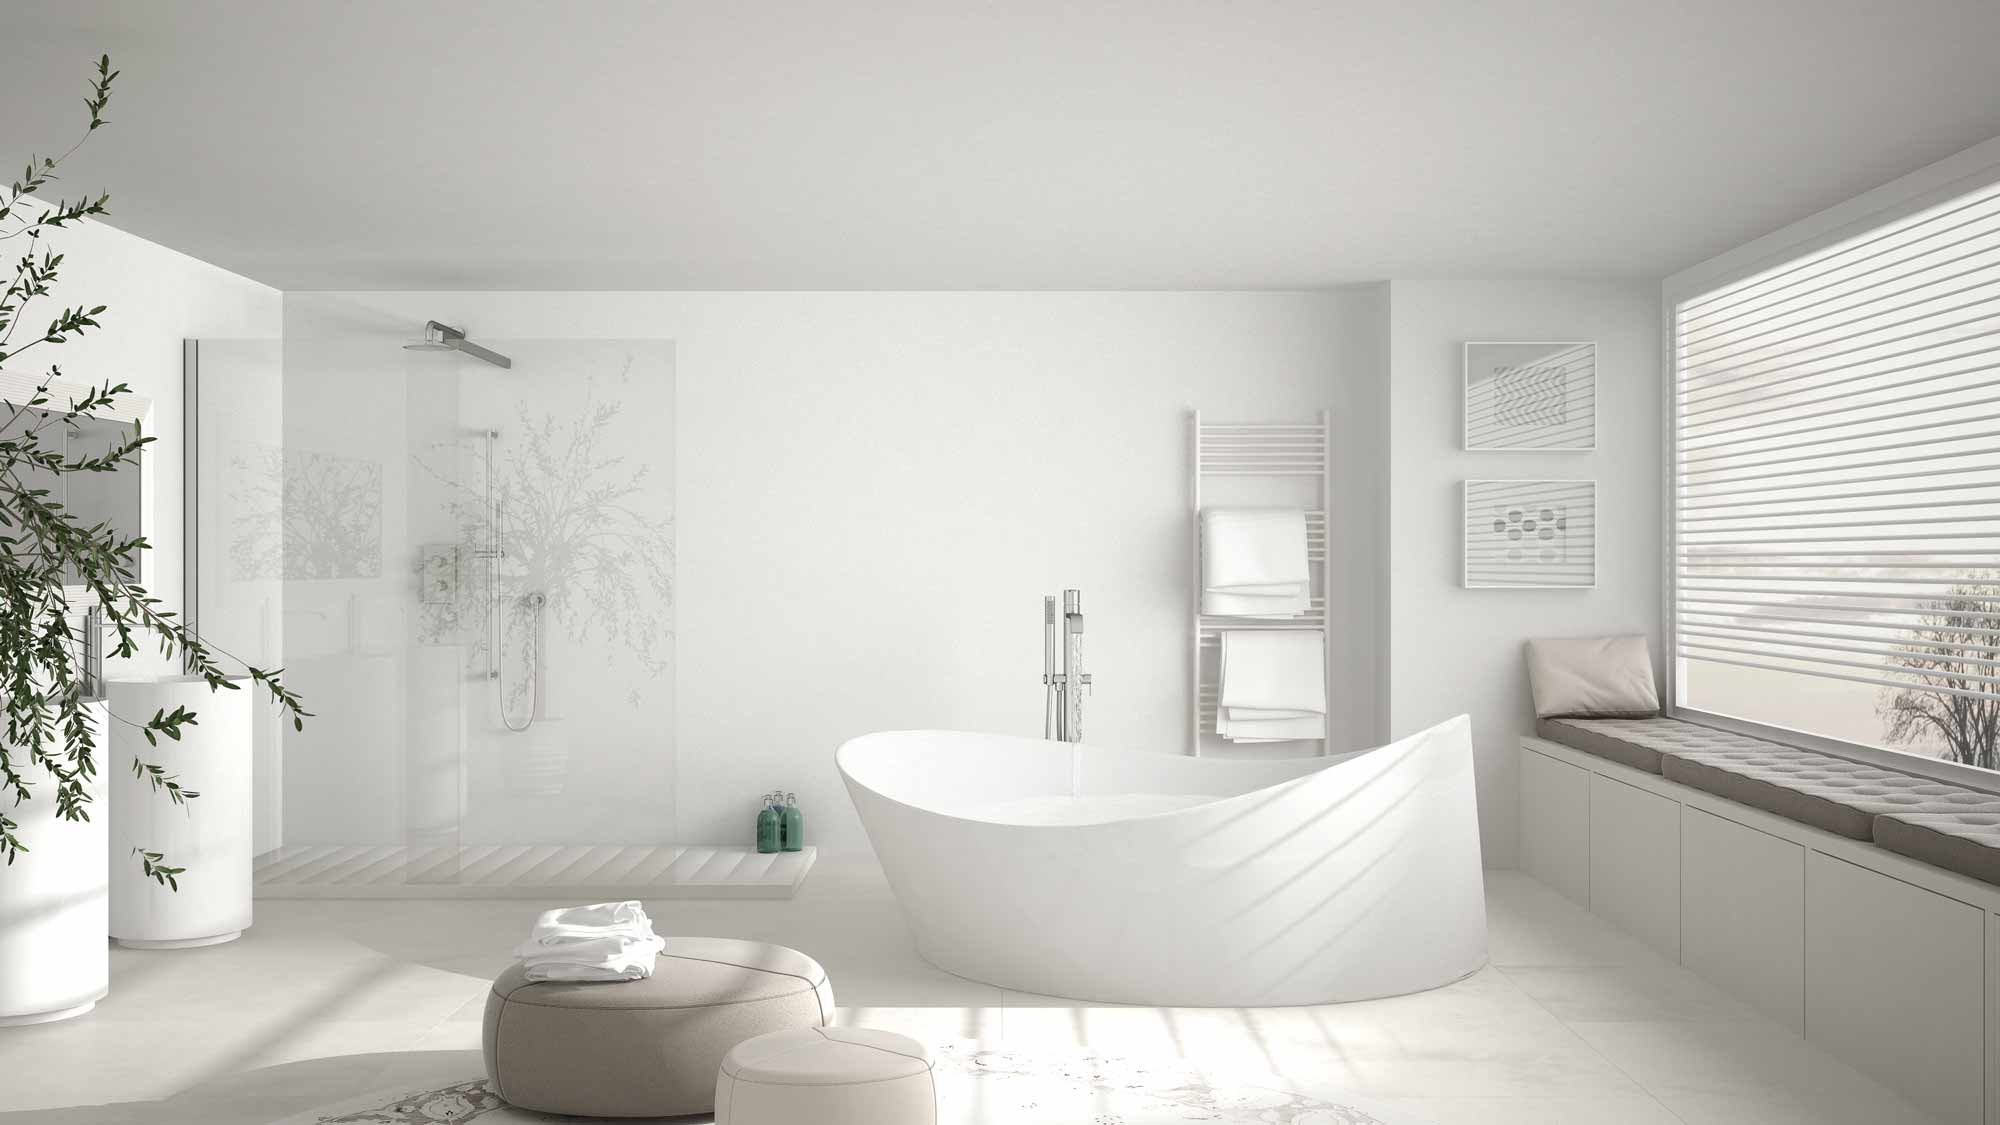 Luxury bathrooms: modern and classic - Santandrea Luxury Houses